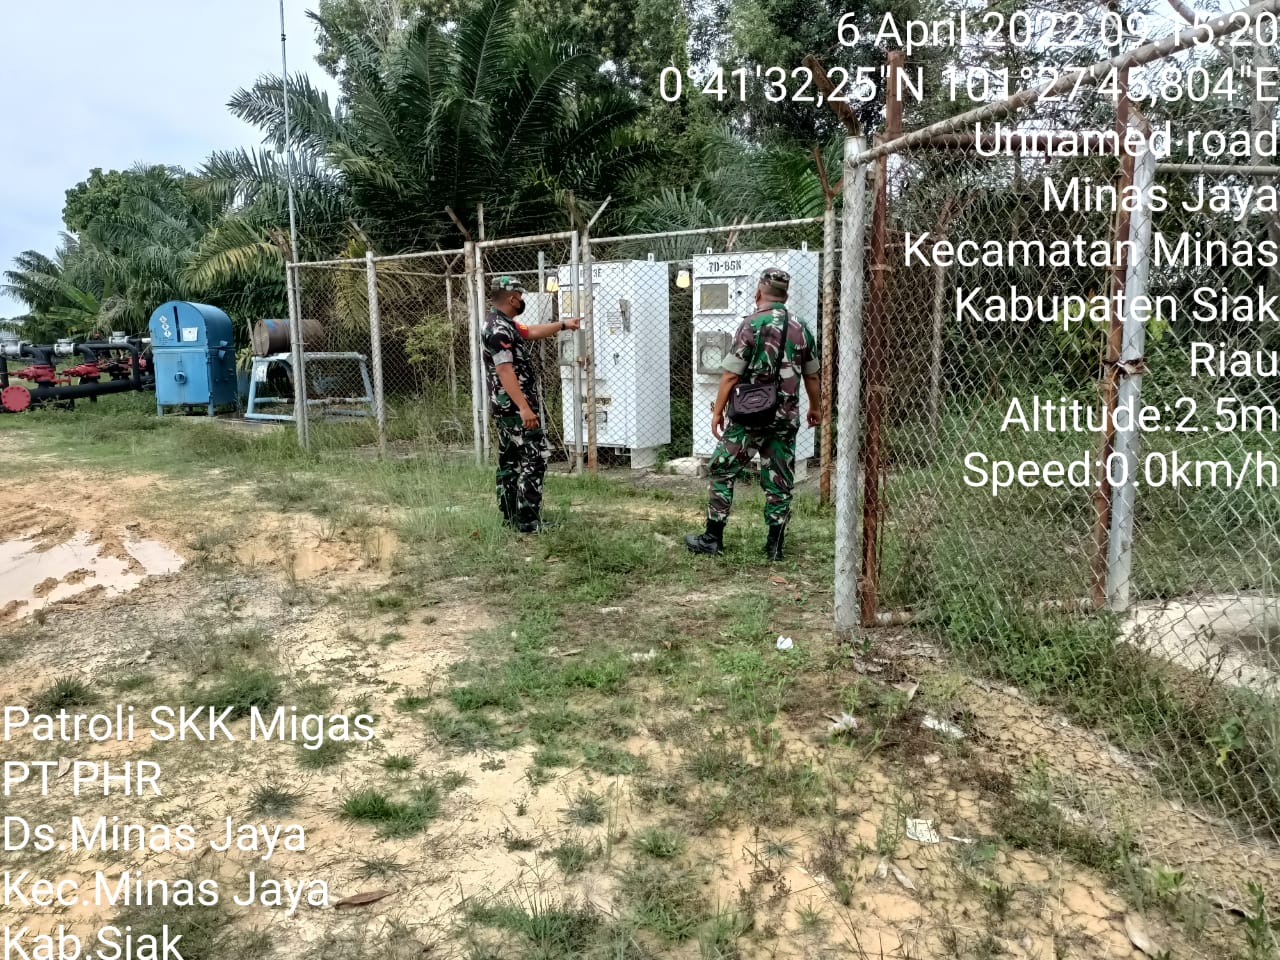 Serma Zulkifli & Kopda AKP Hutagalung Patroli Binter SKK Migas di Wilayah Minas Jaya